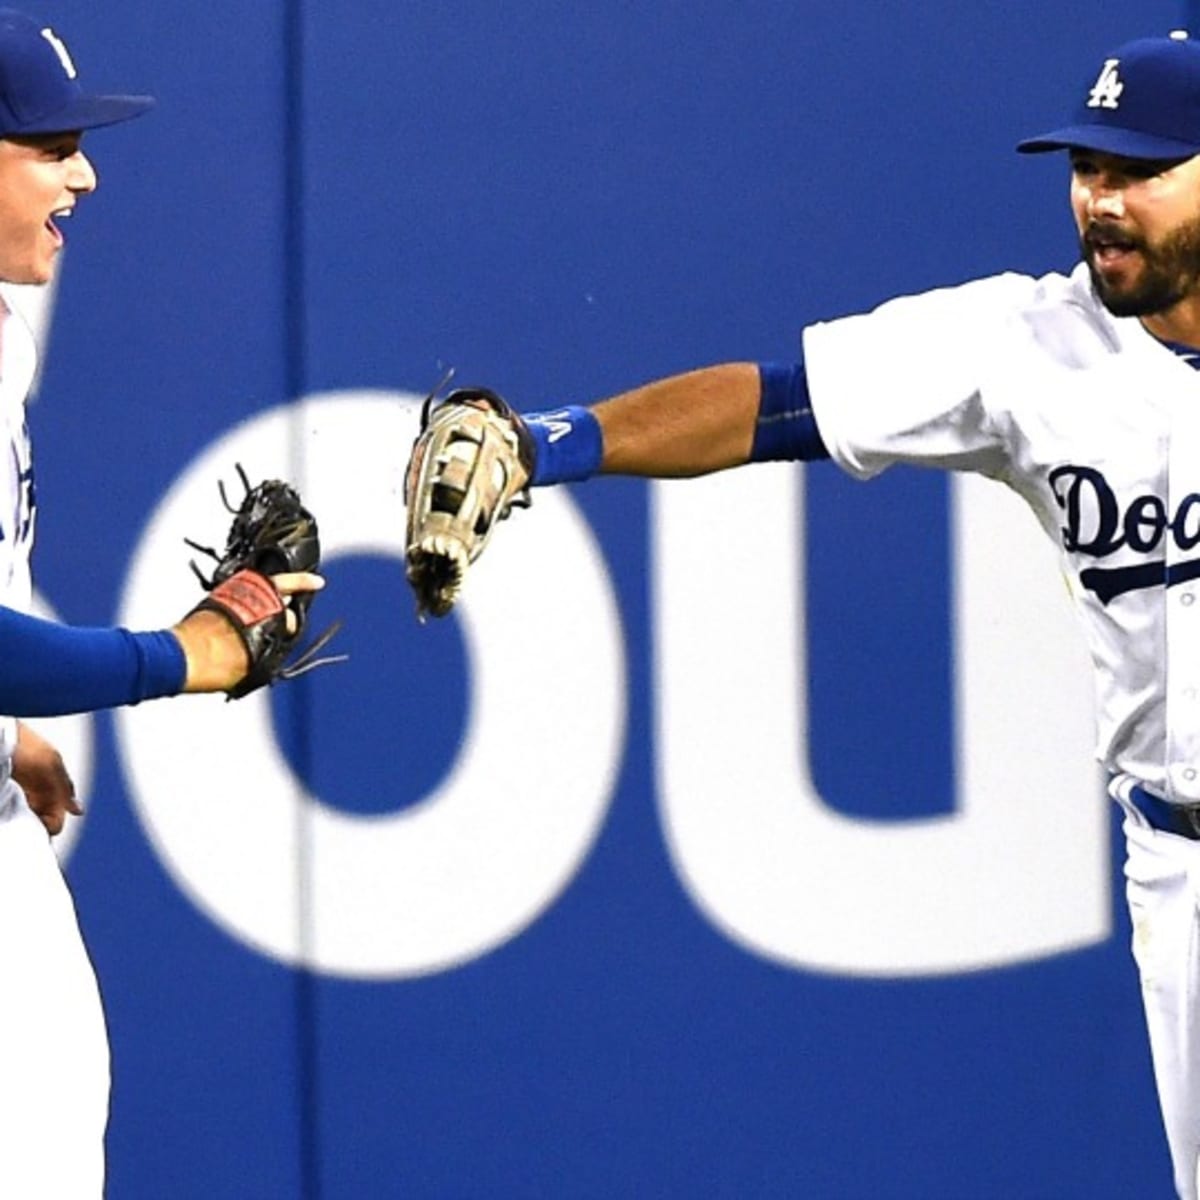 Joc Pederson leads defensively-improved Los Angeles Dodgers - Sports  Illustrated